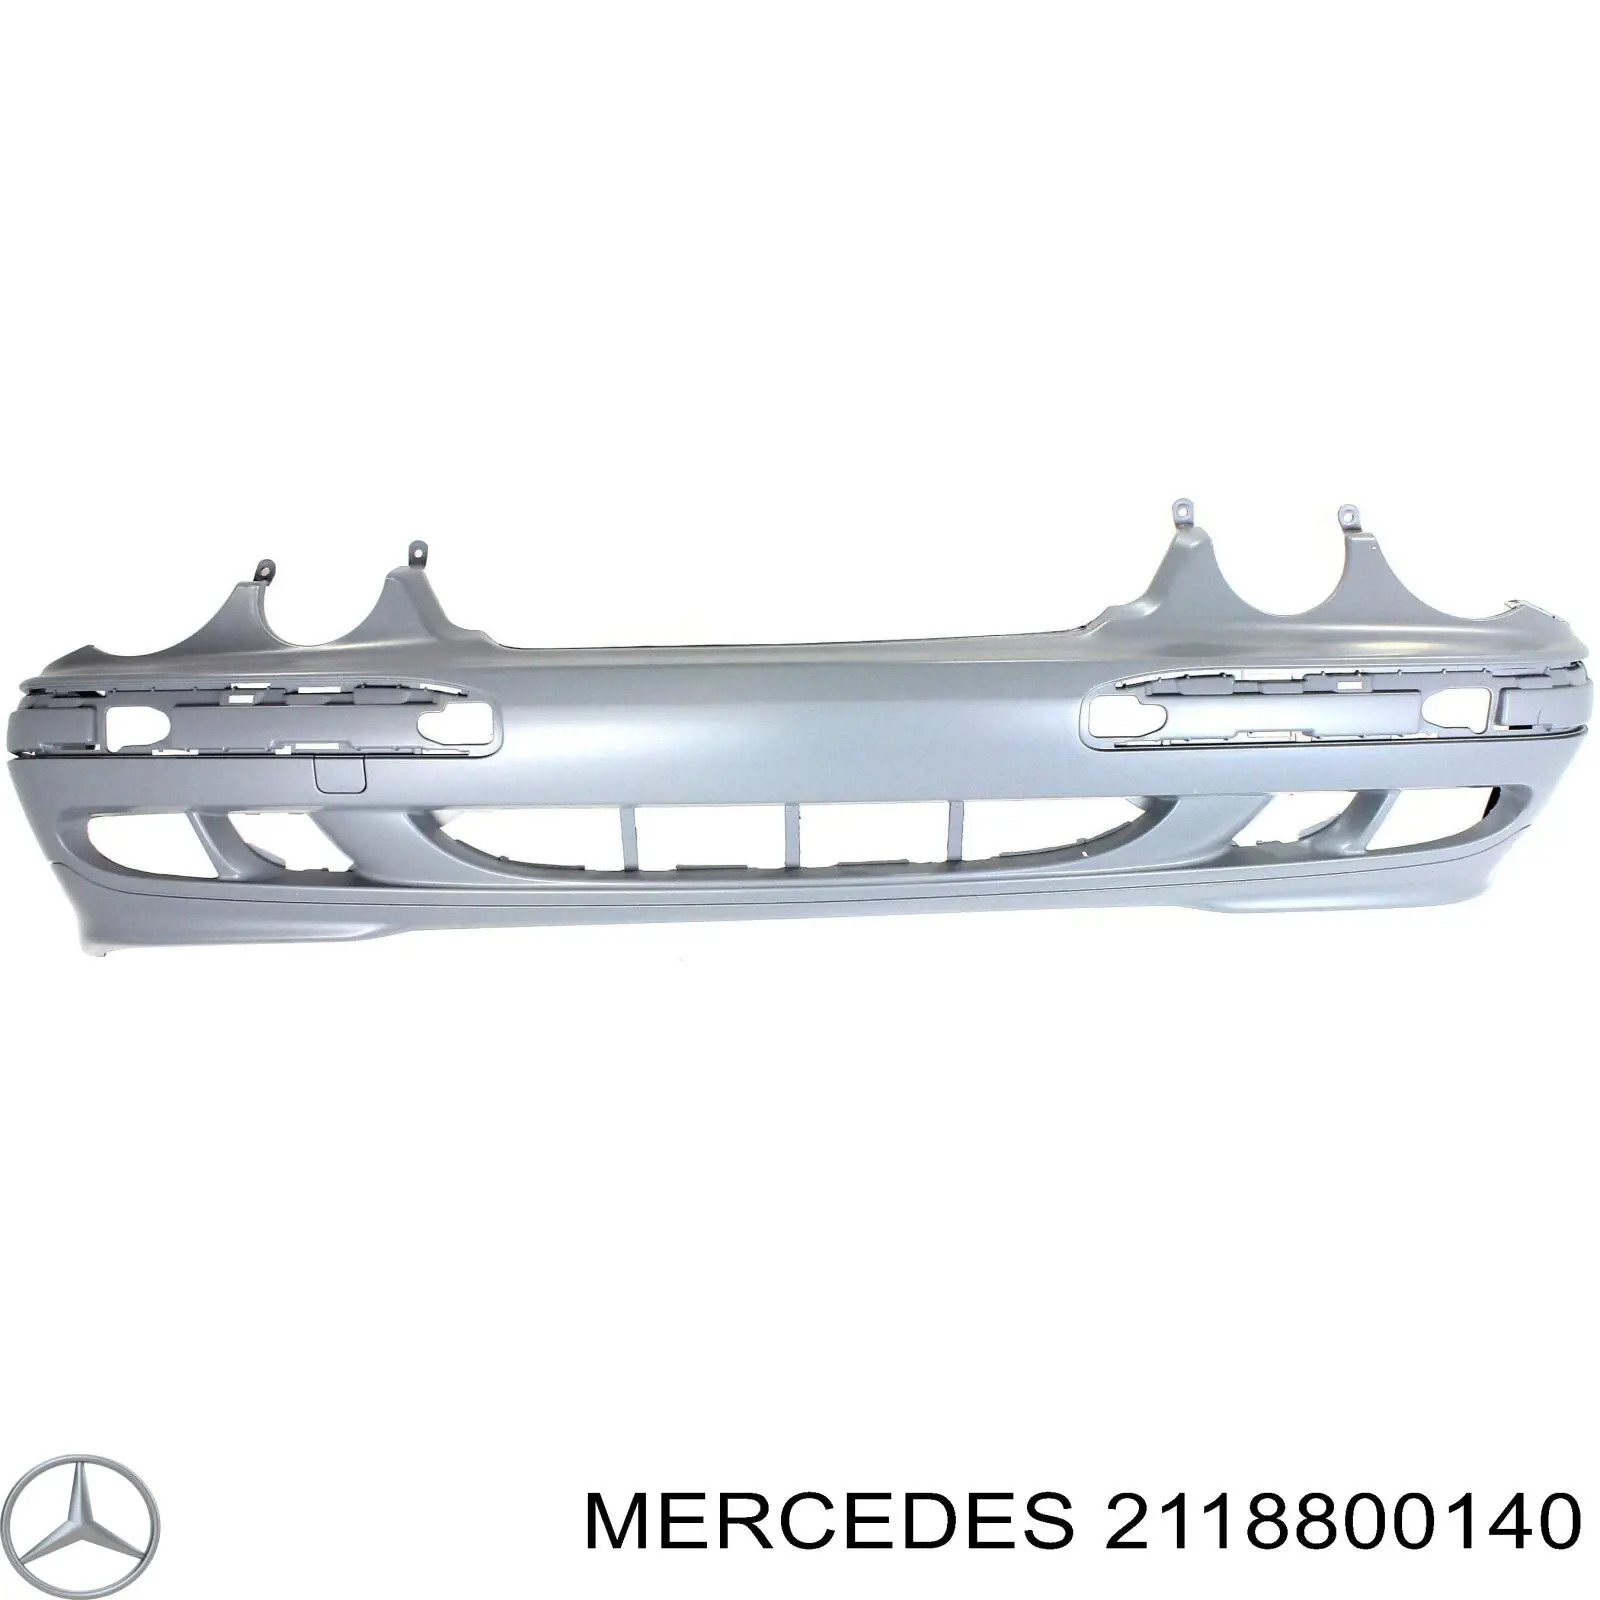 21188001409999 Mercedes paragolpes delantero